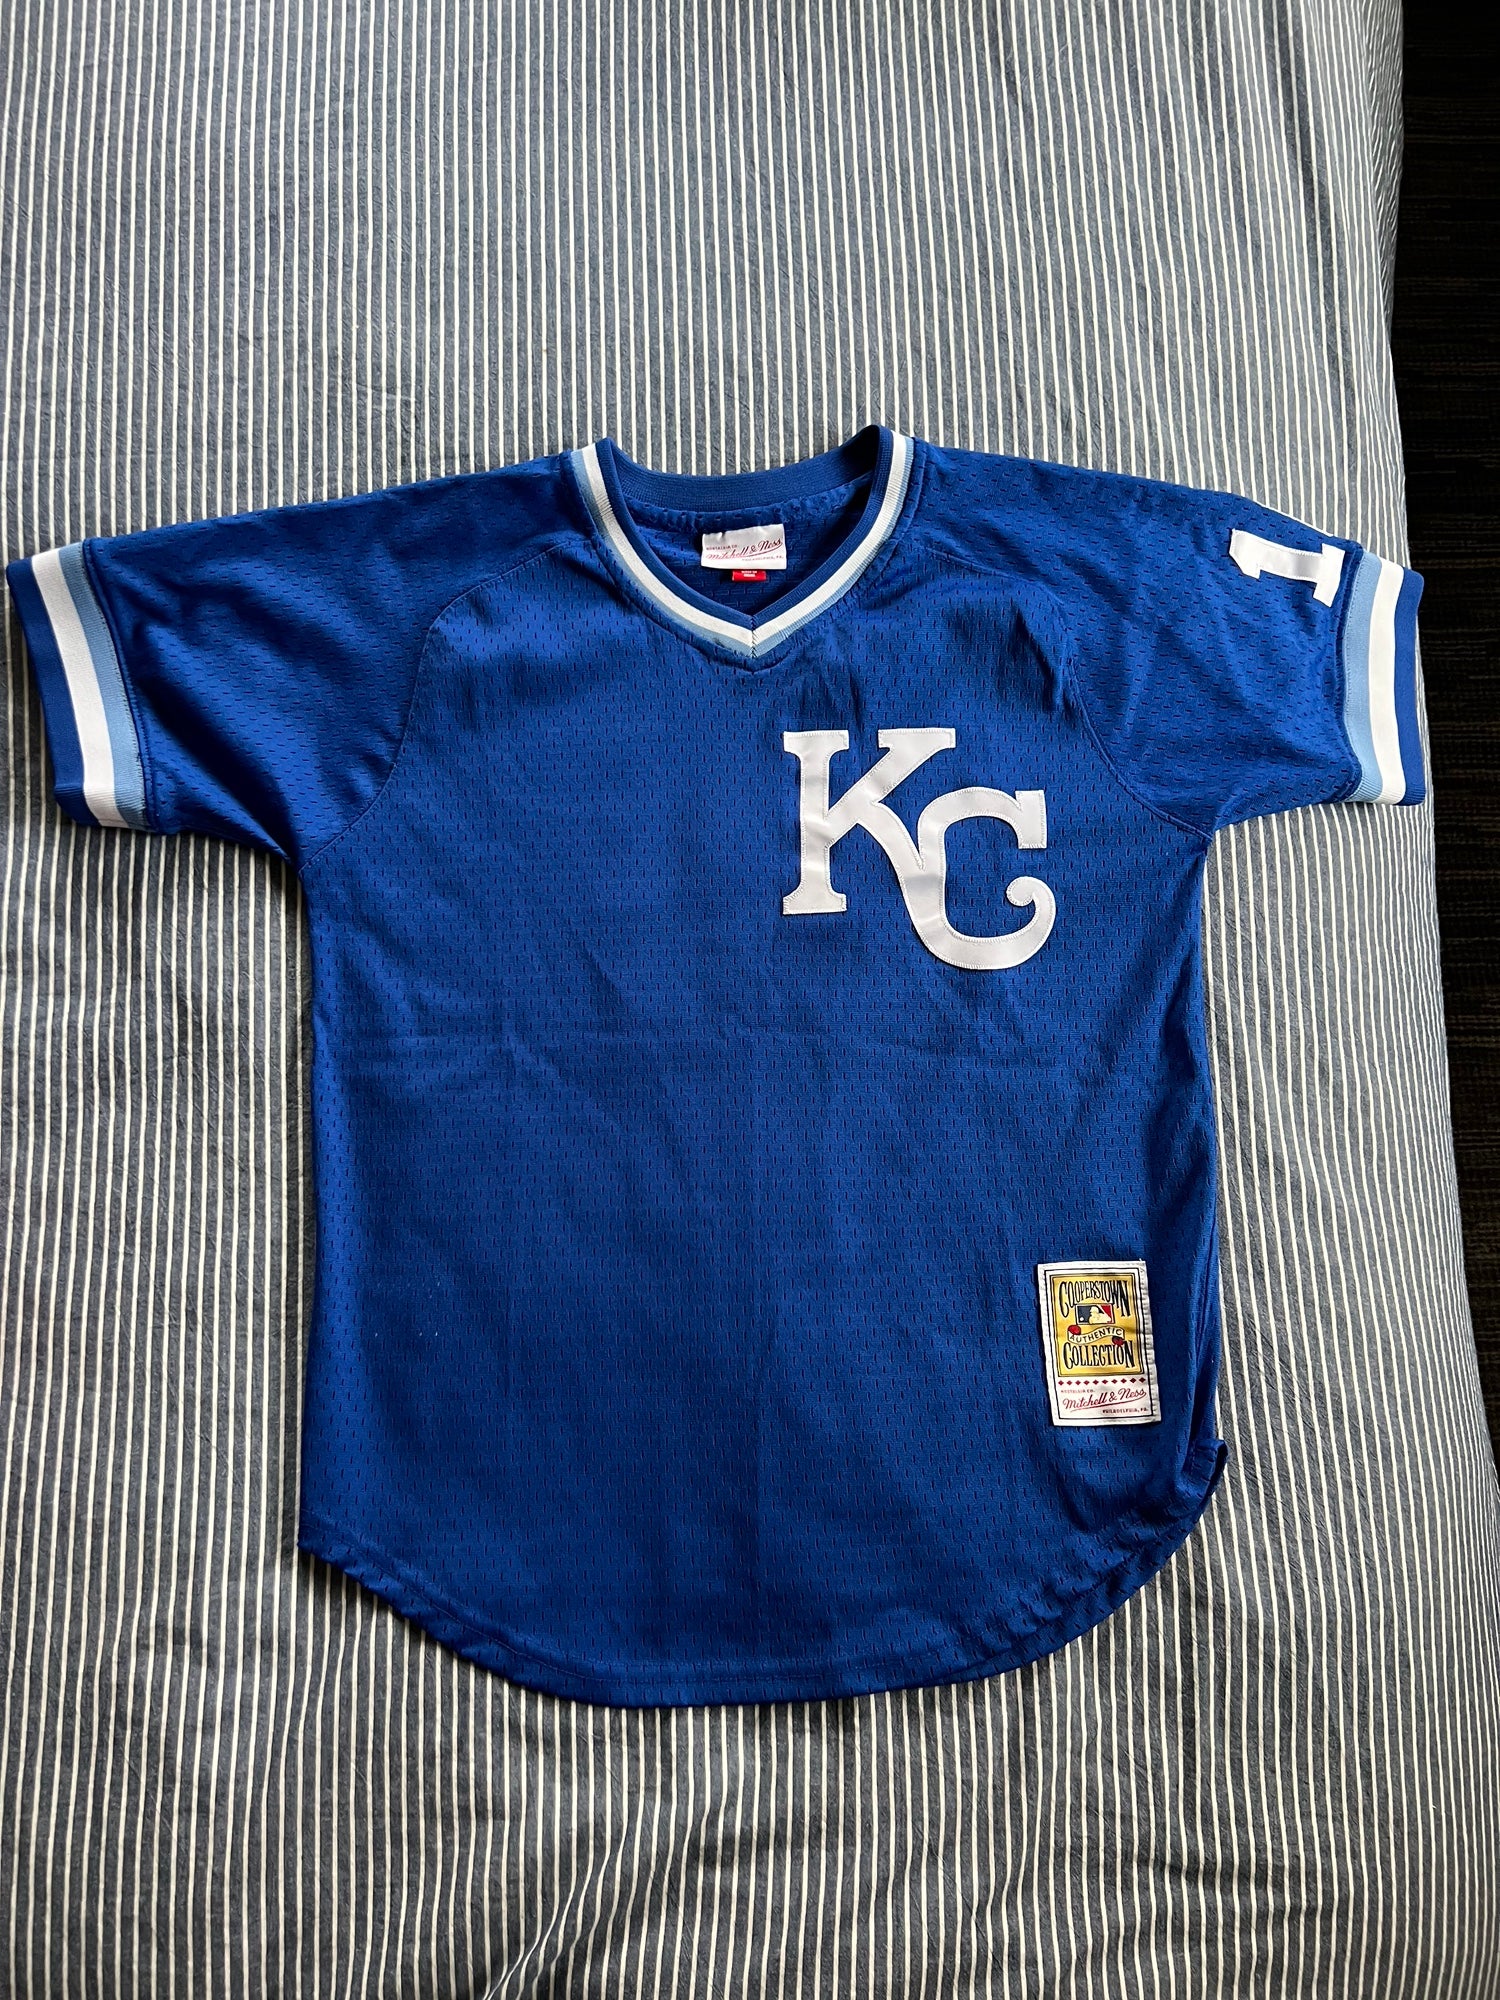 Mitchell & Ness, Shirts, Bo Jackson Kc Royals Authentic Jersey